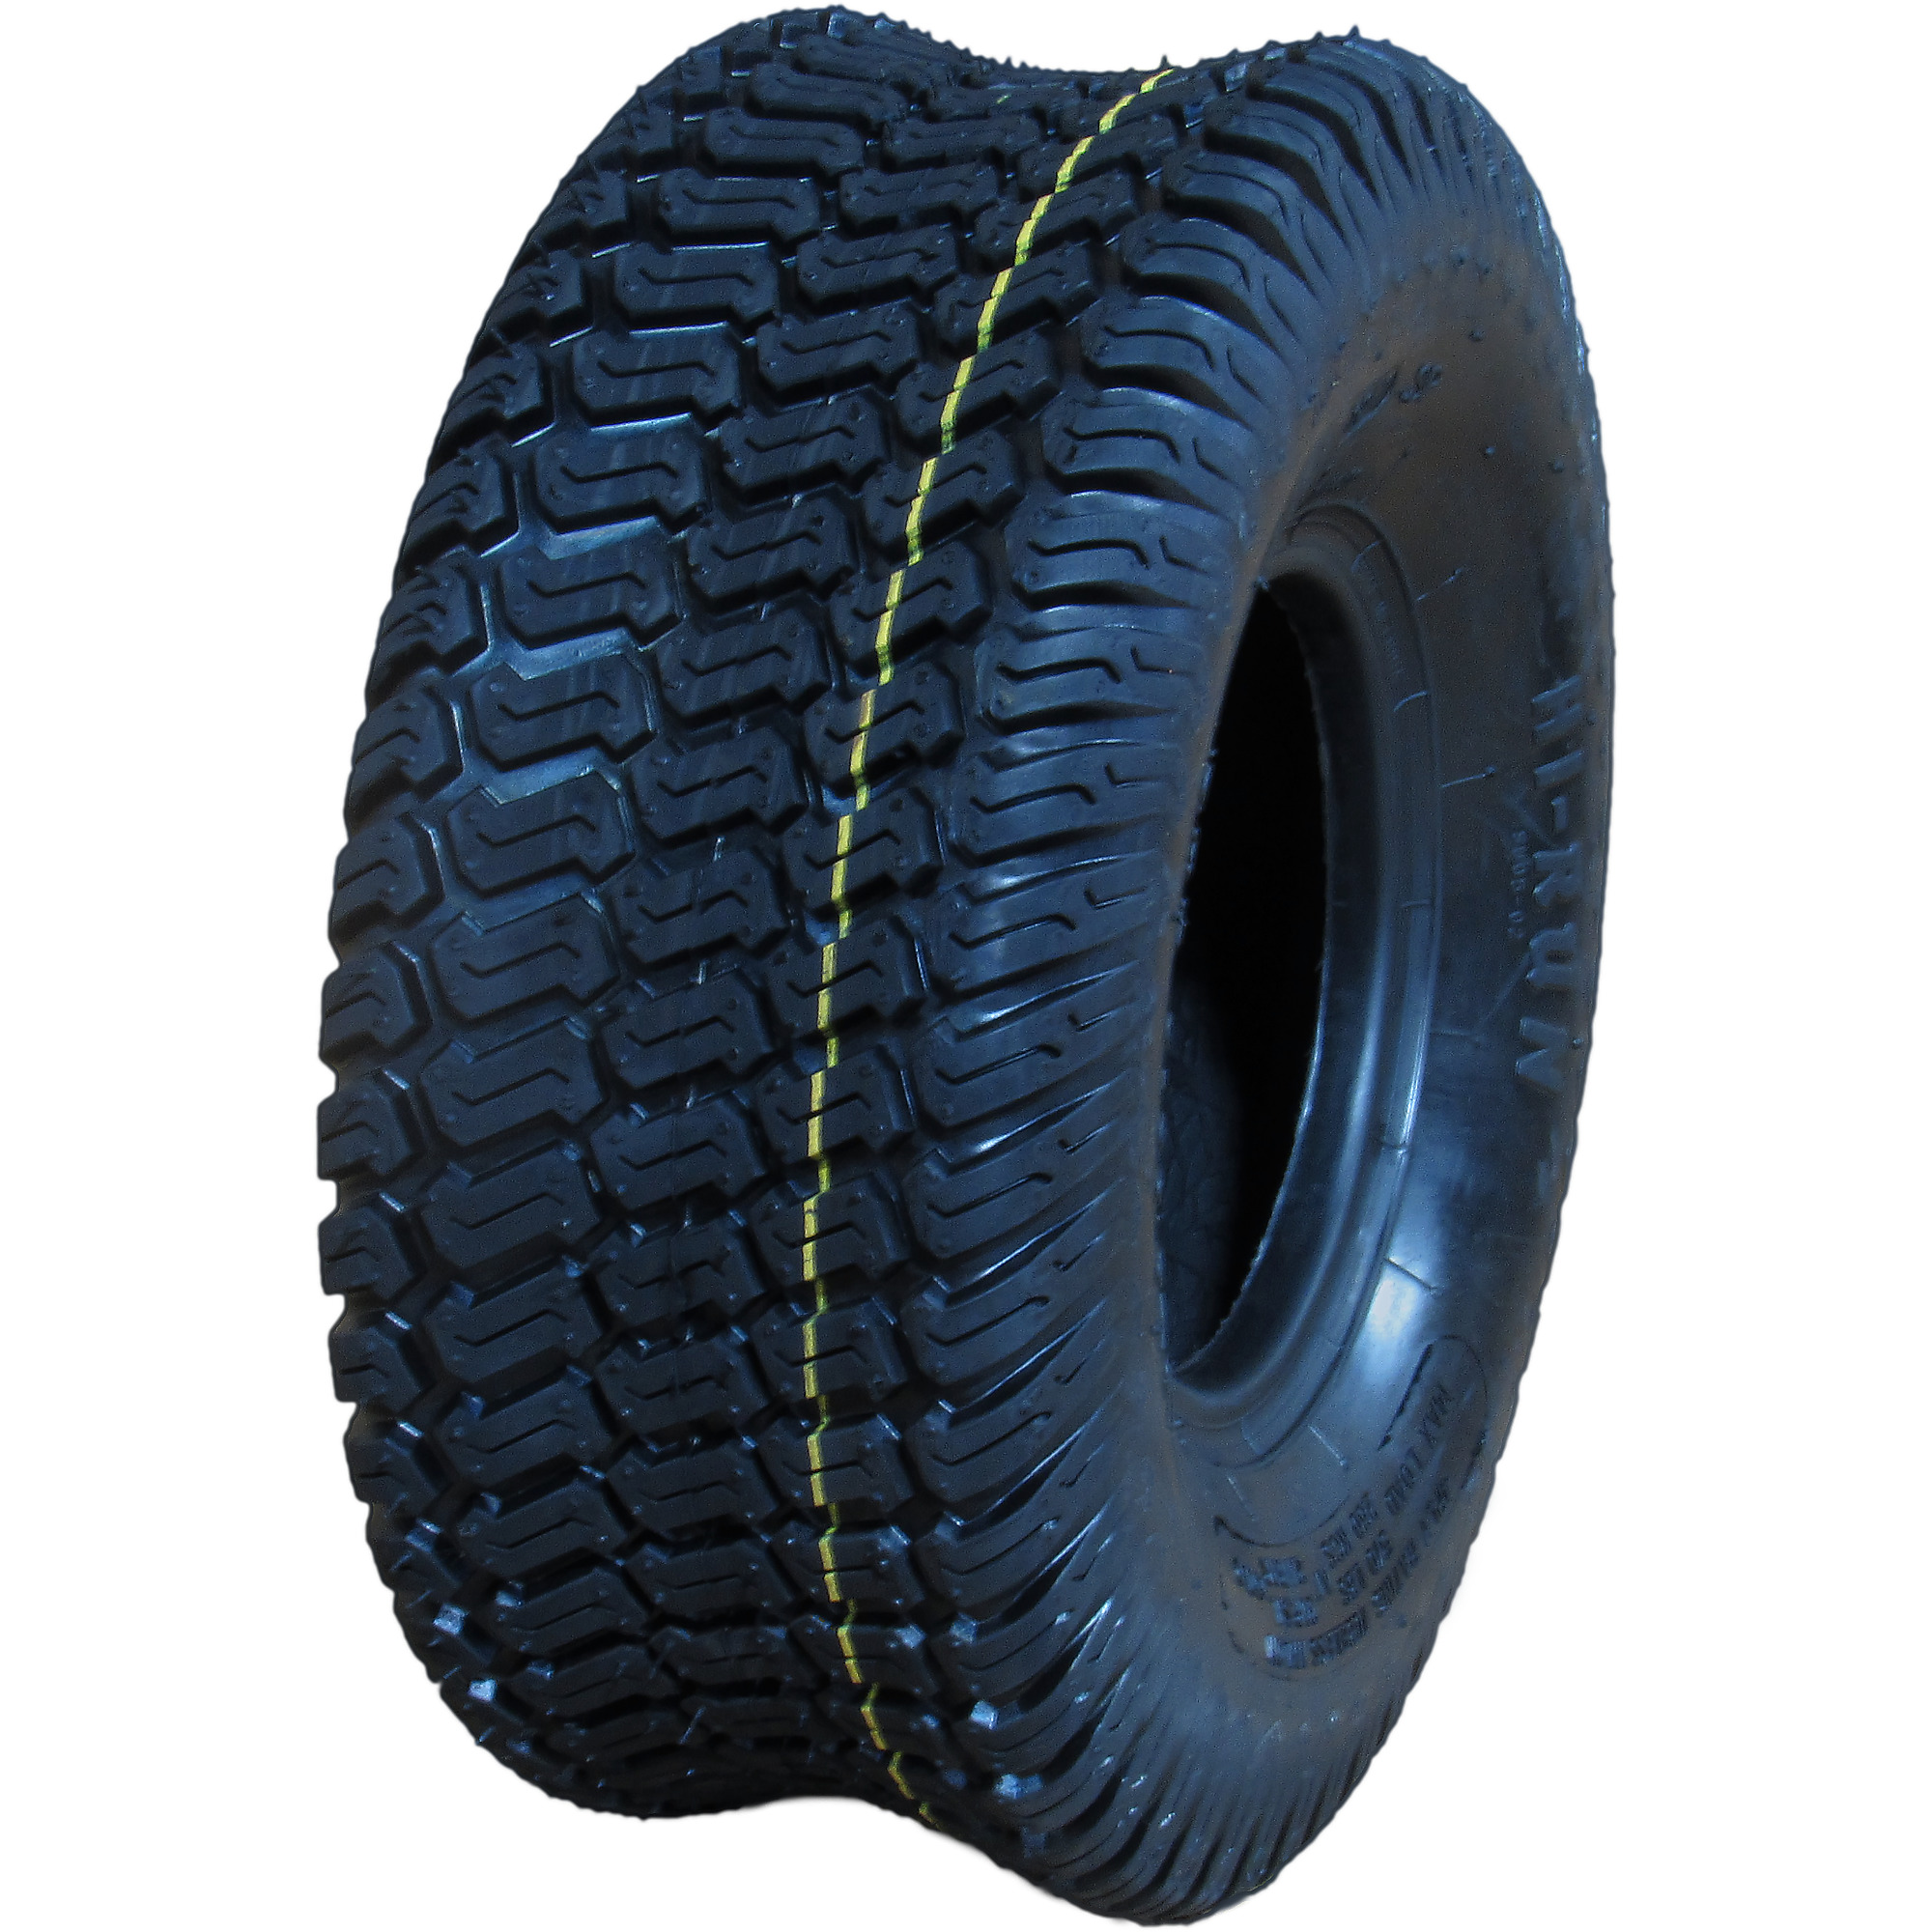 HI-RUN, Lawn Garden Tire, SU05 Turf, Tire Size 15X6.00-6 Load Range Rating B, Model WD1124